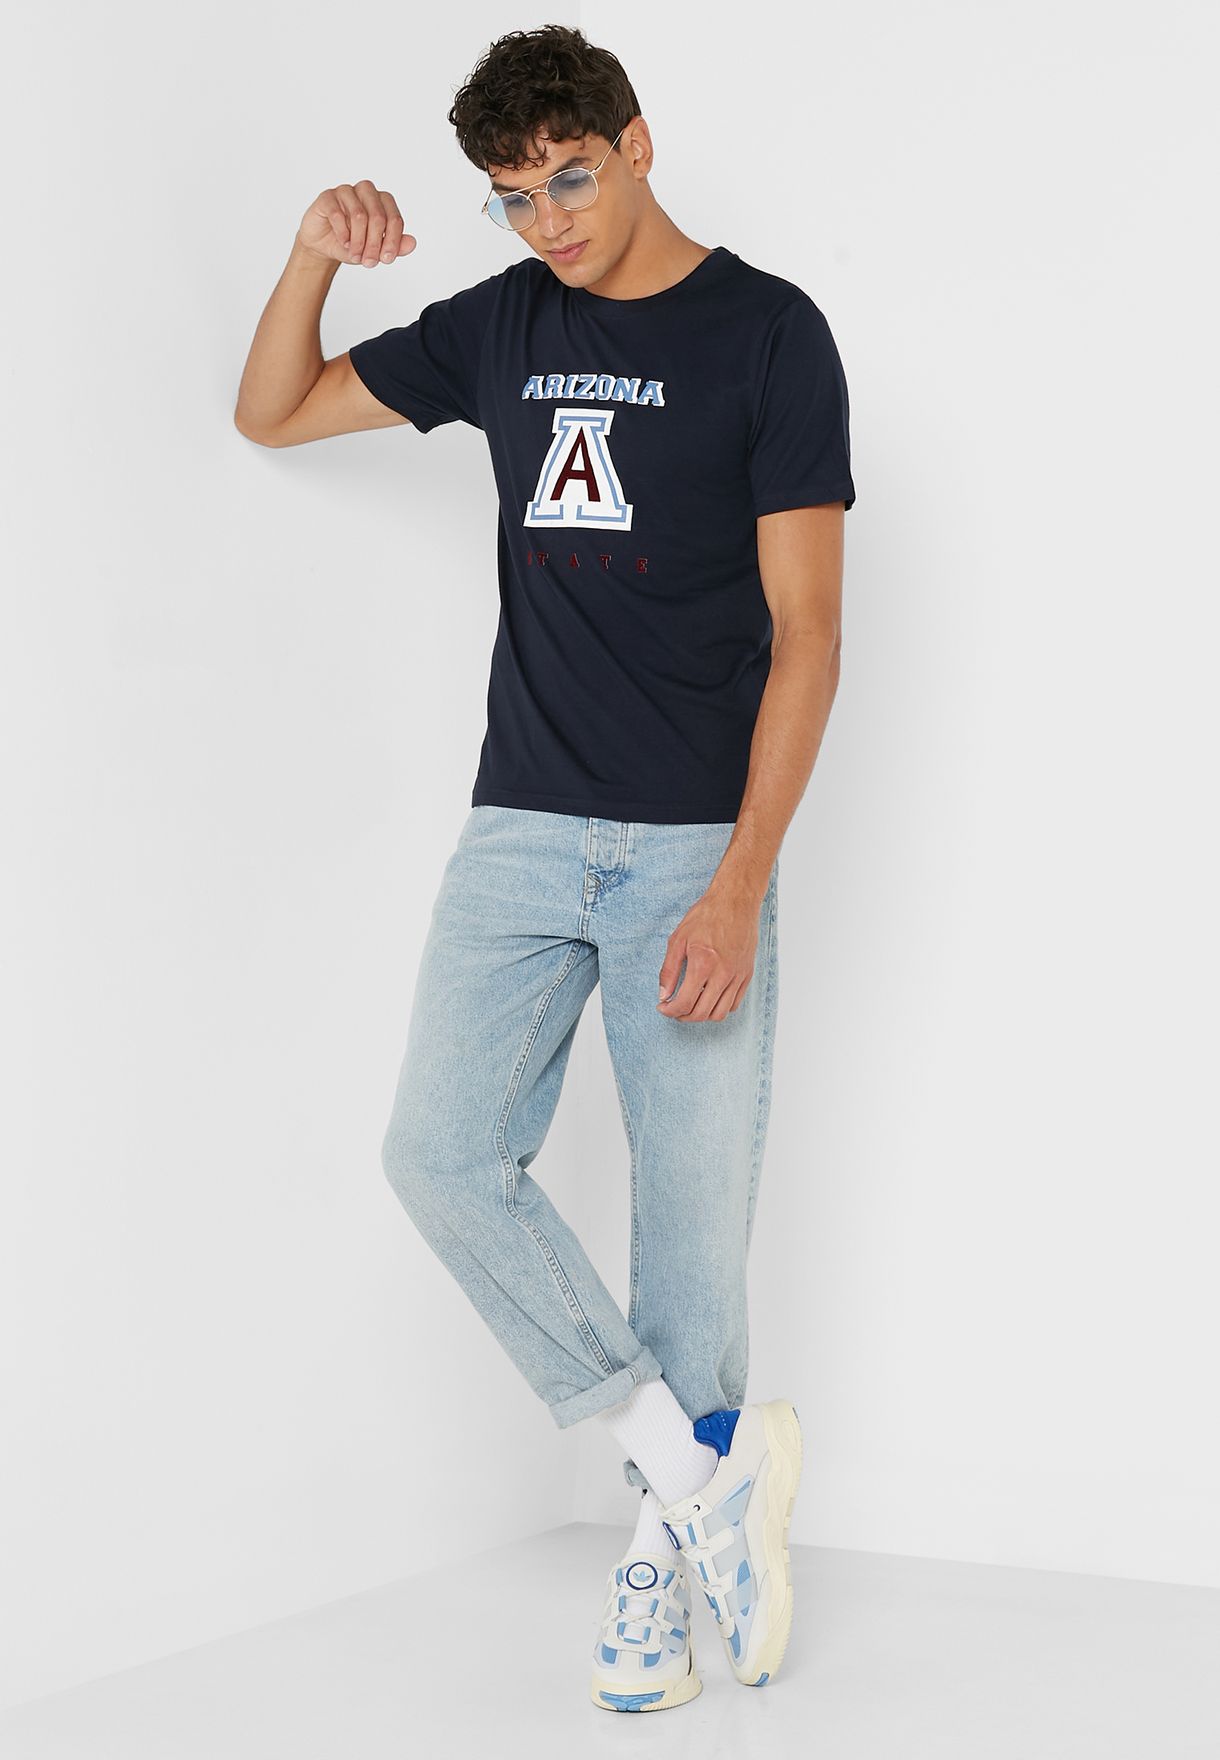 Arizona Print T Shirt